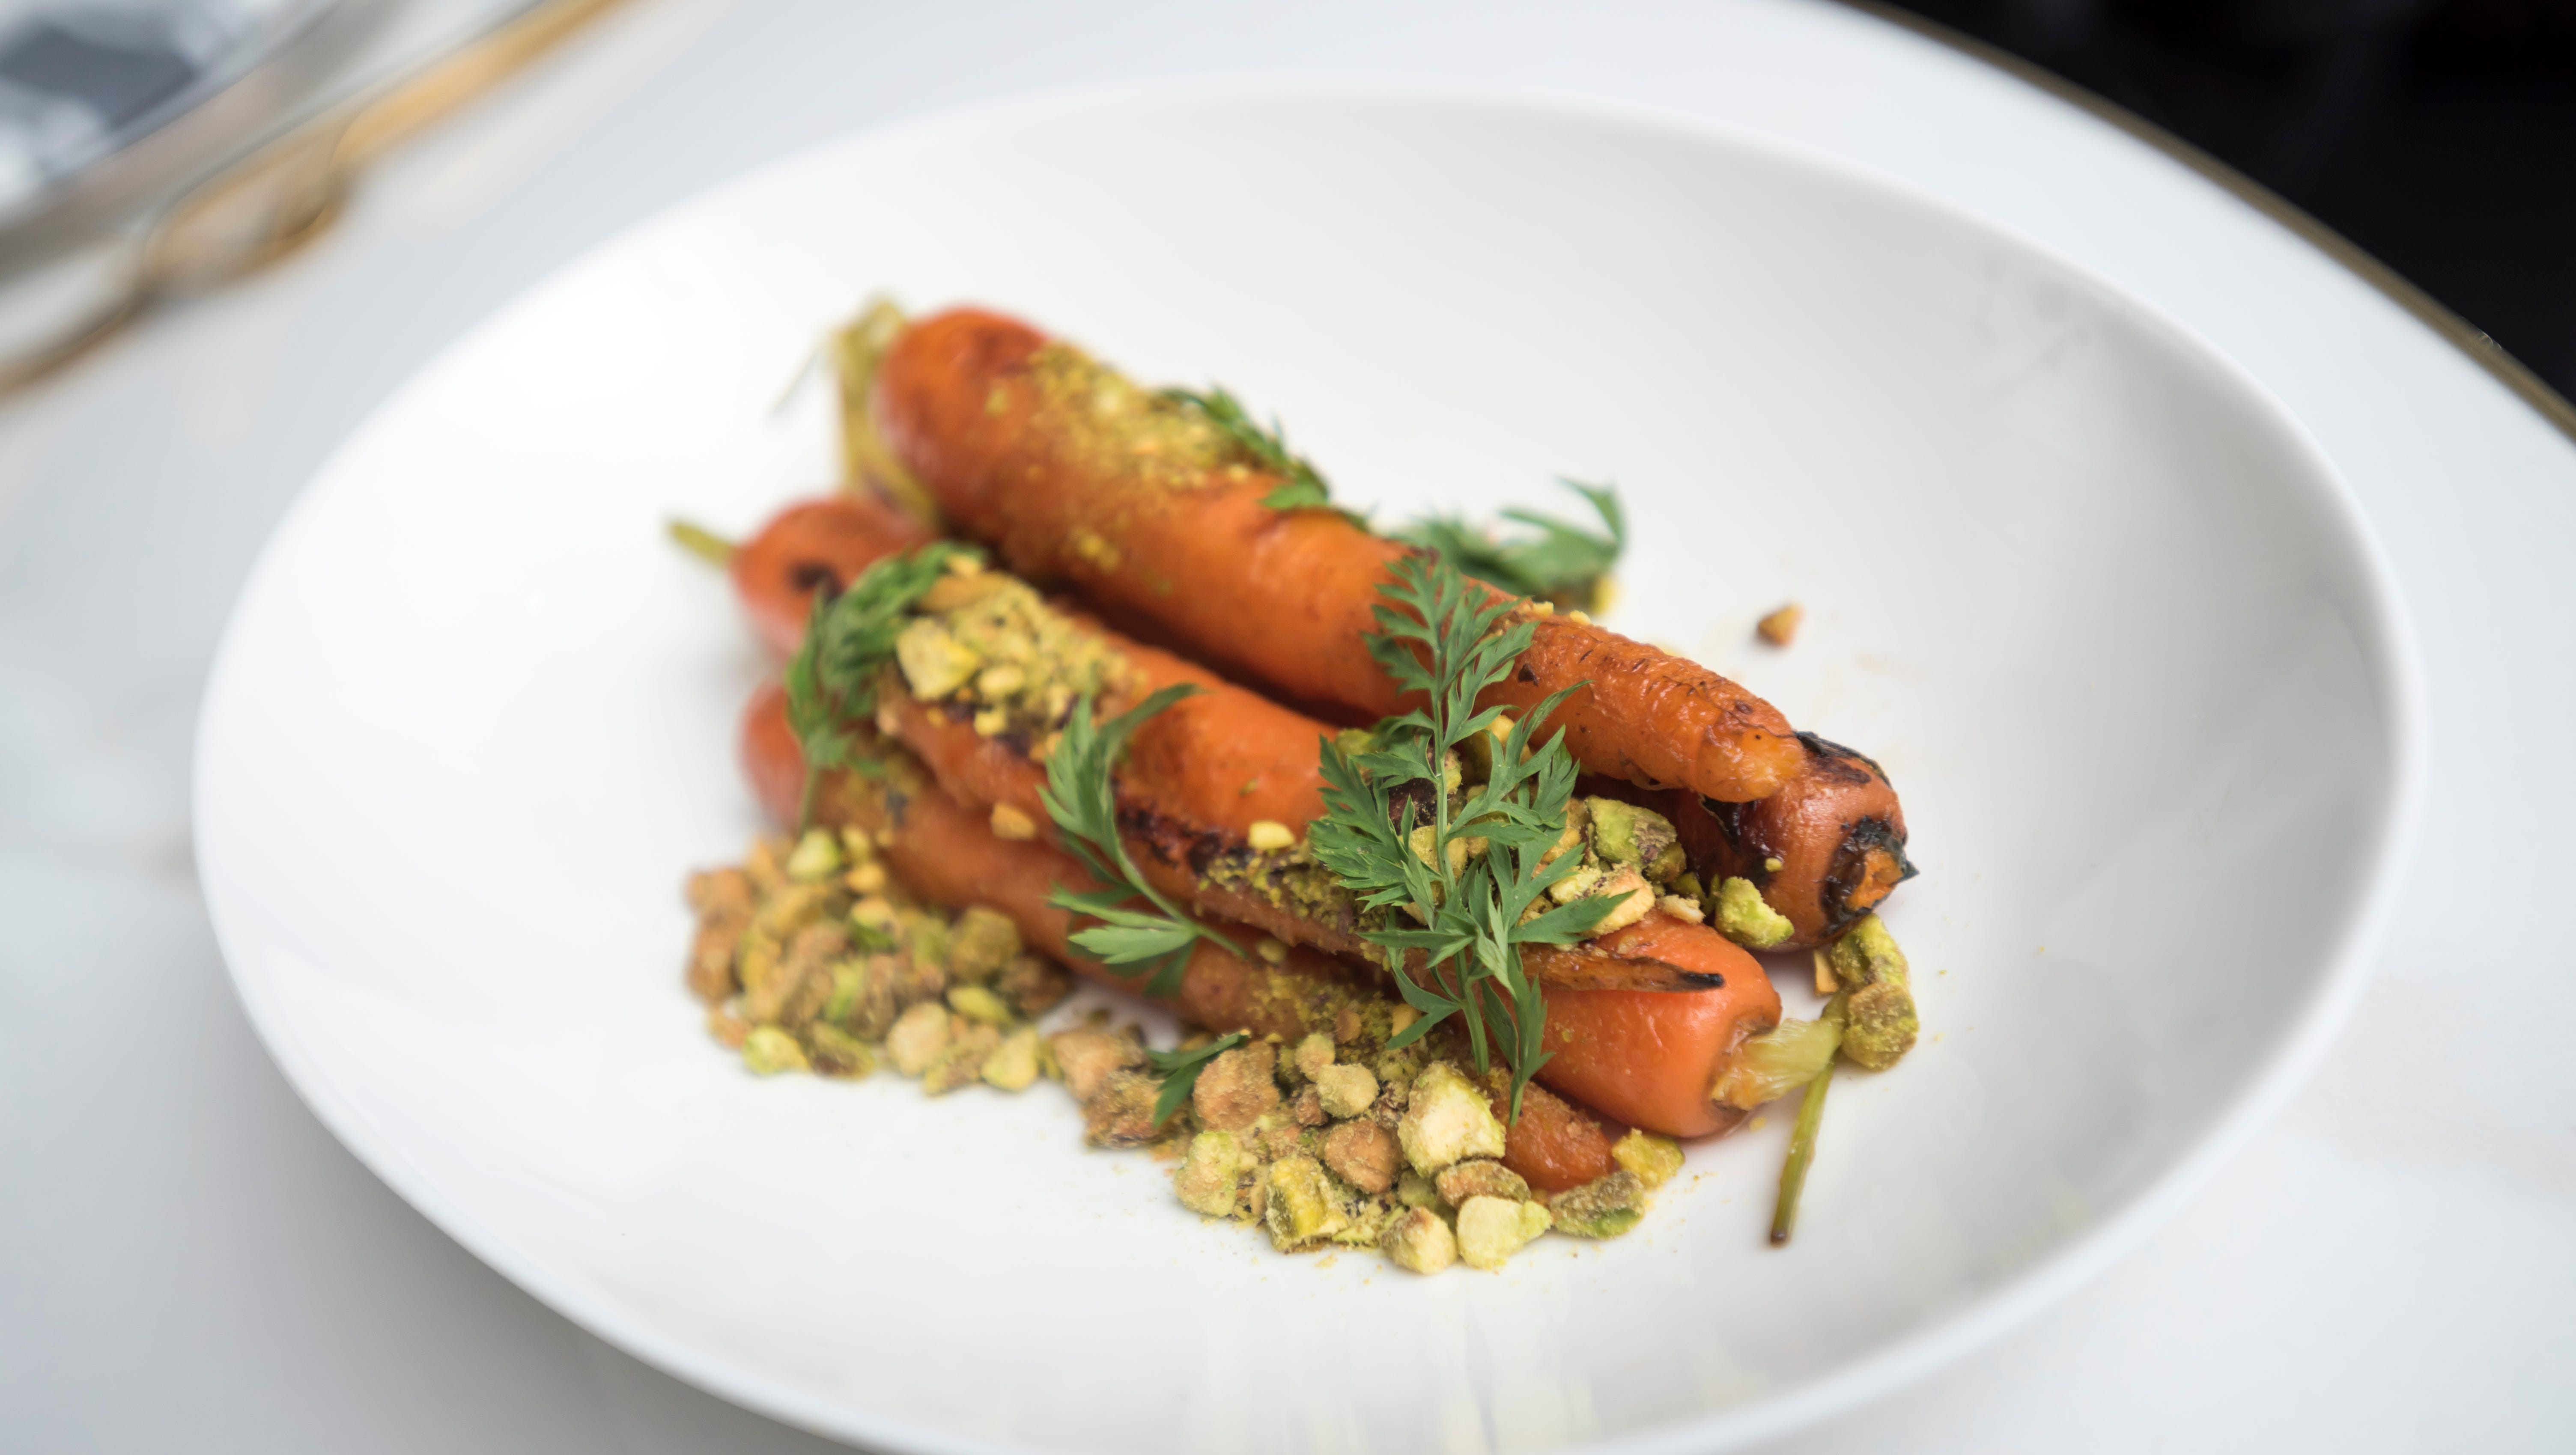 The carrots with pistachio, and orange honey.